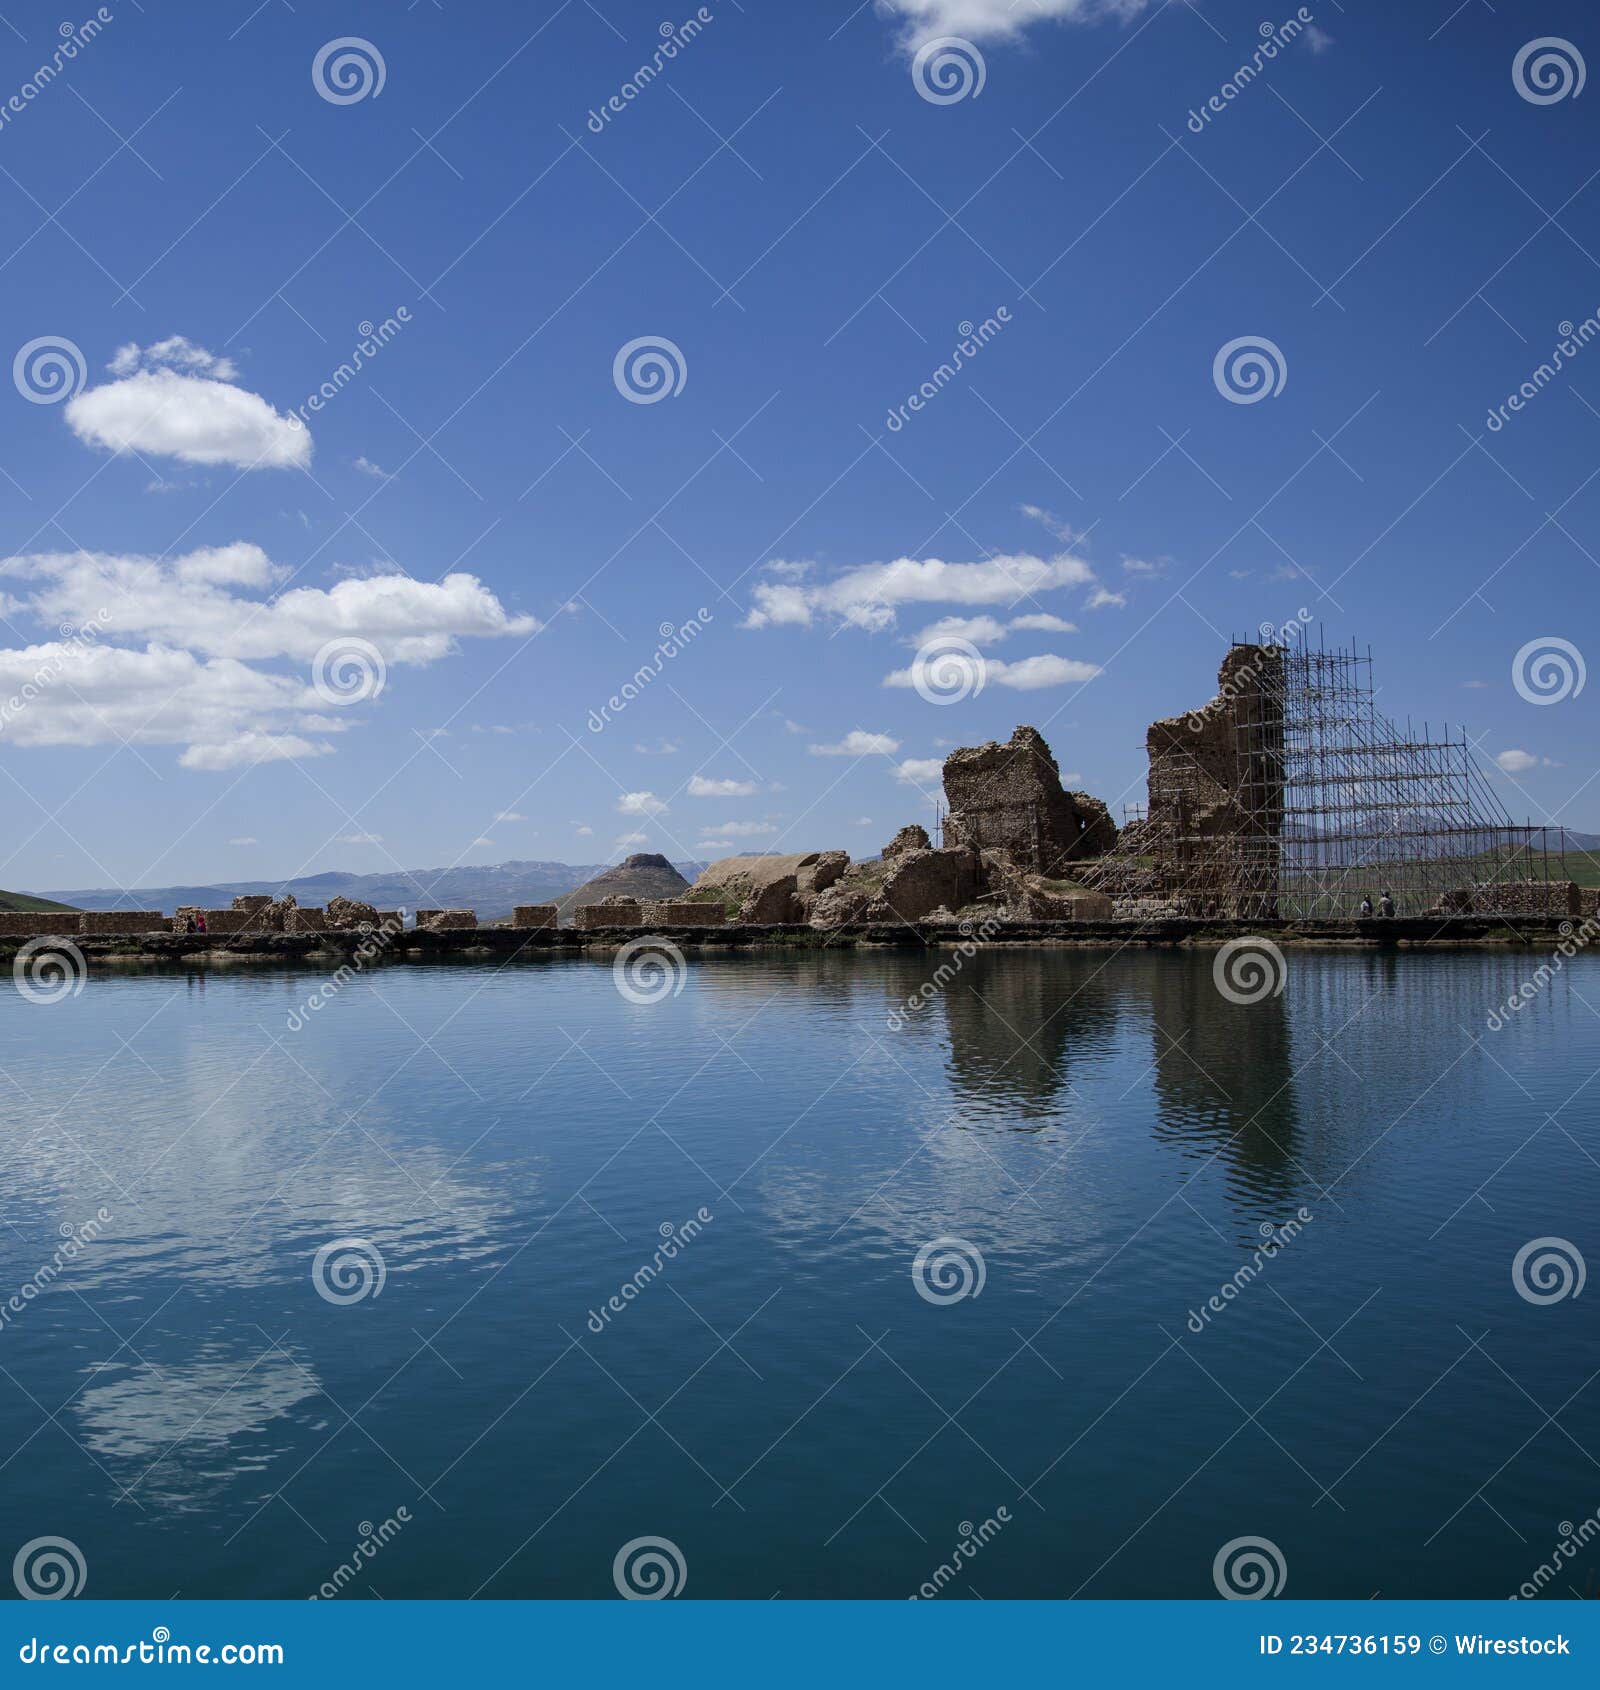 lake landscape at historical takht-e soleyman, iran